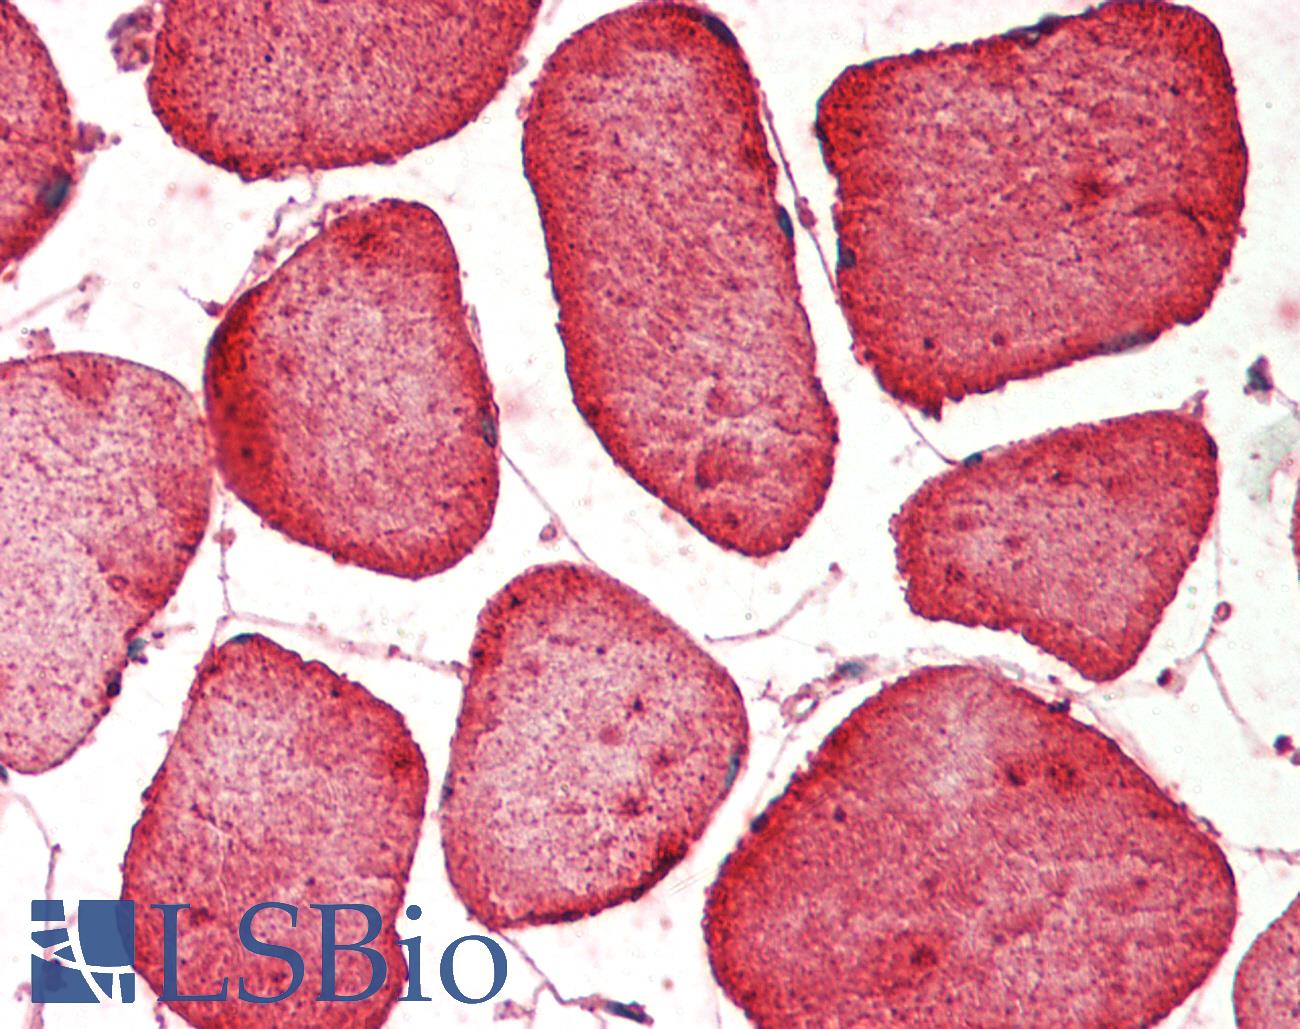 Hamartin / TSC1 Antibody - Human Skeletal Muscle: Formalin-Fixed, Paraffin-Embedded (FFPE)